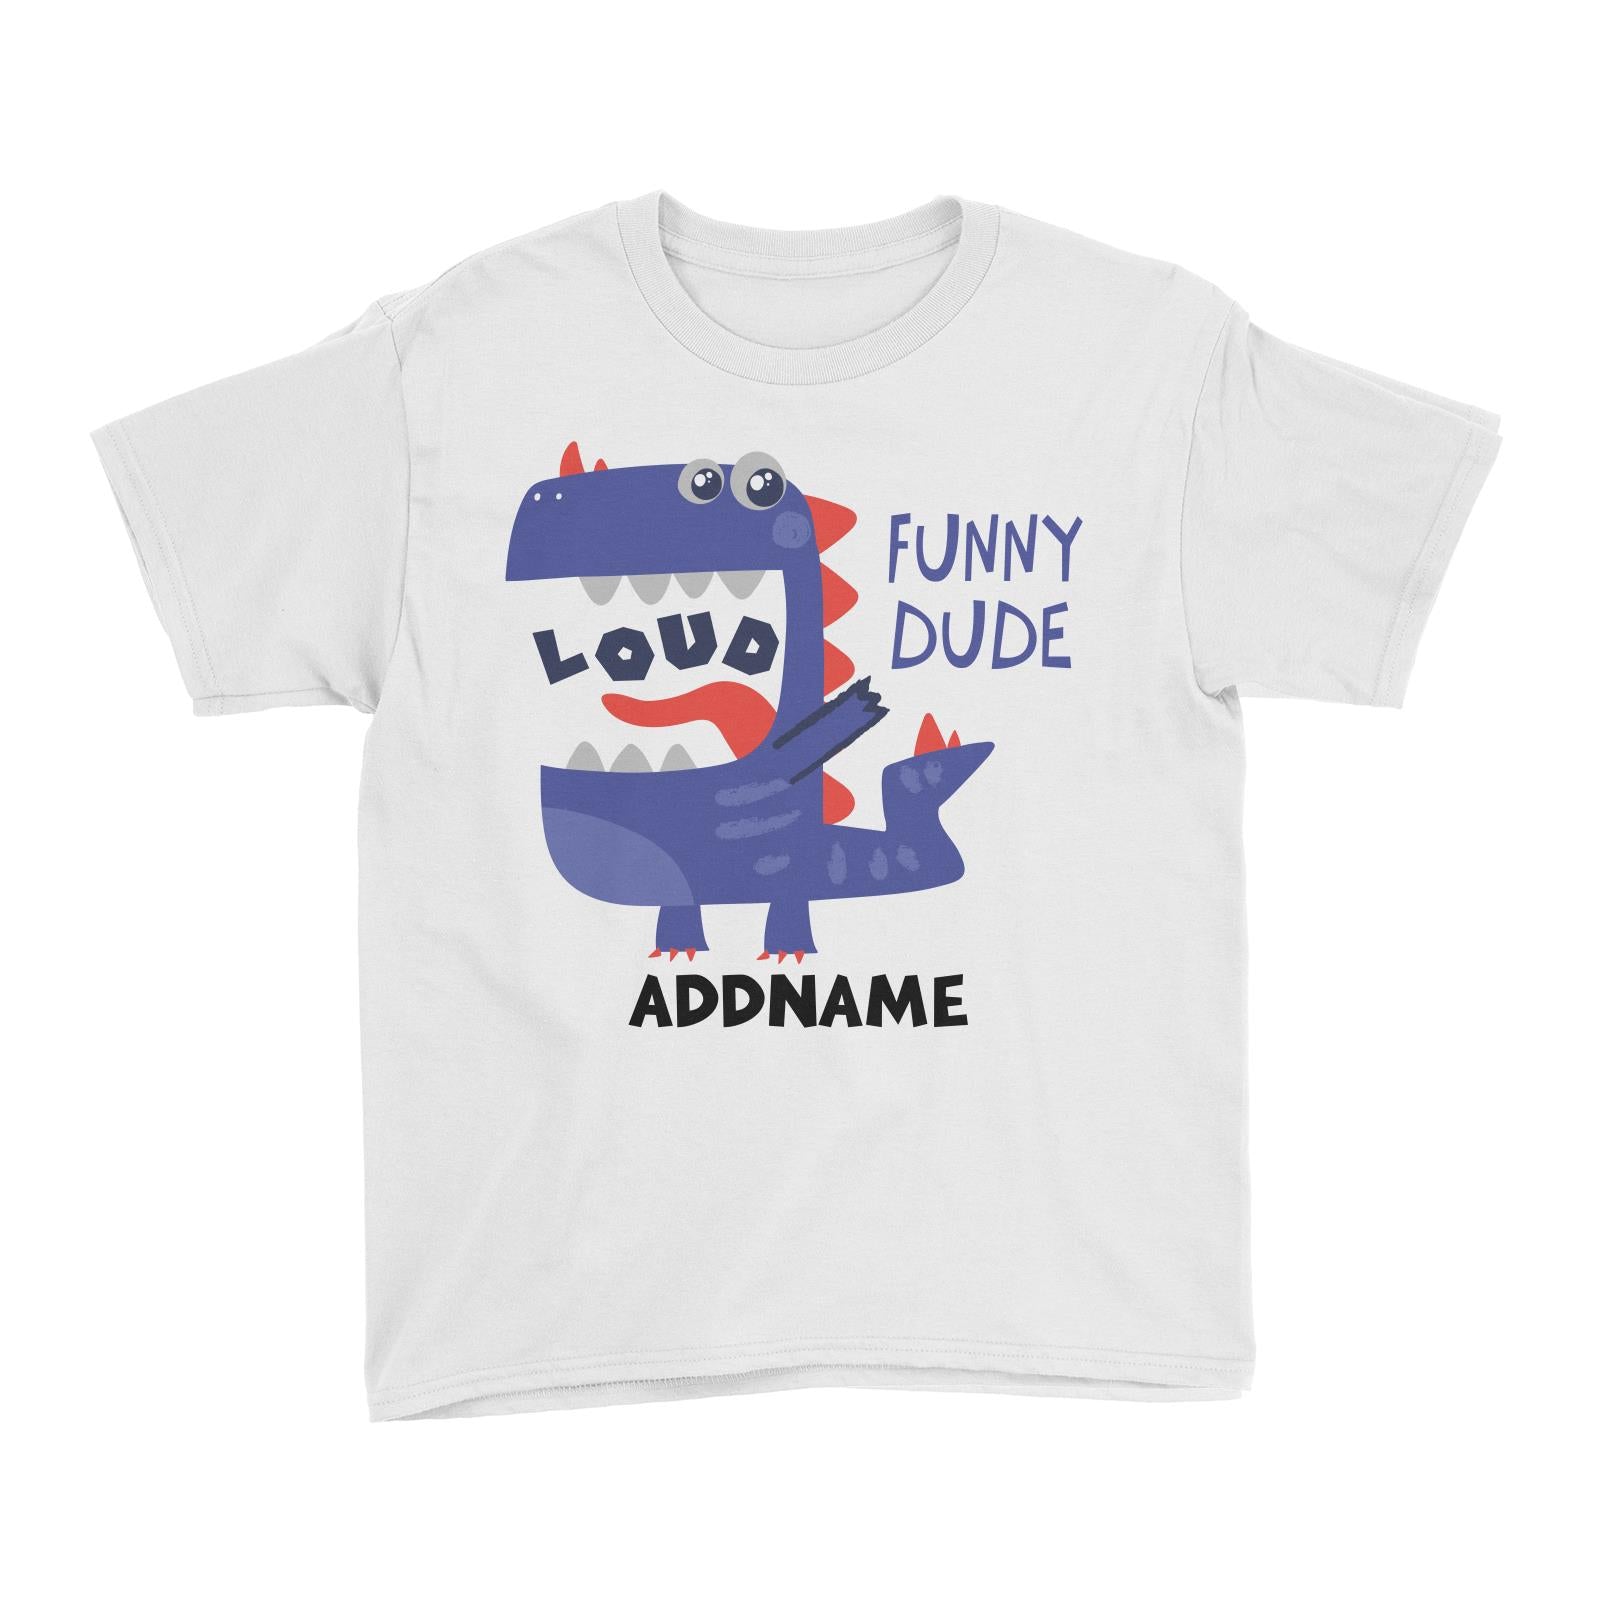 Loud Funny Dude Dinosaur Addname White Kid's T-Shirt